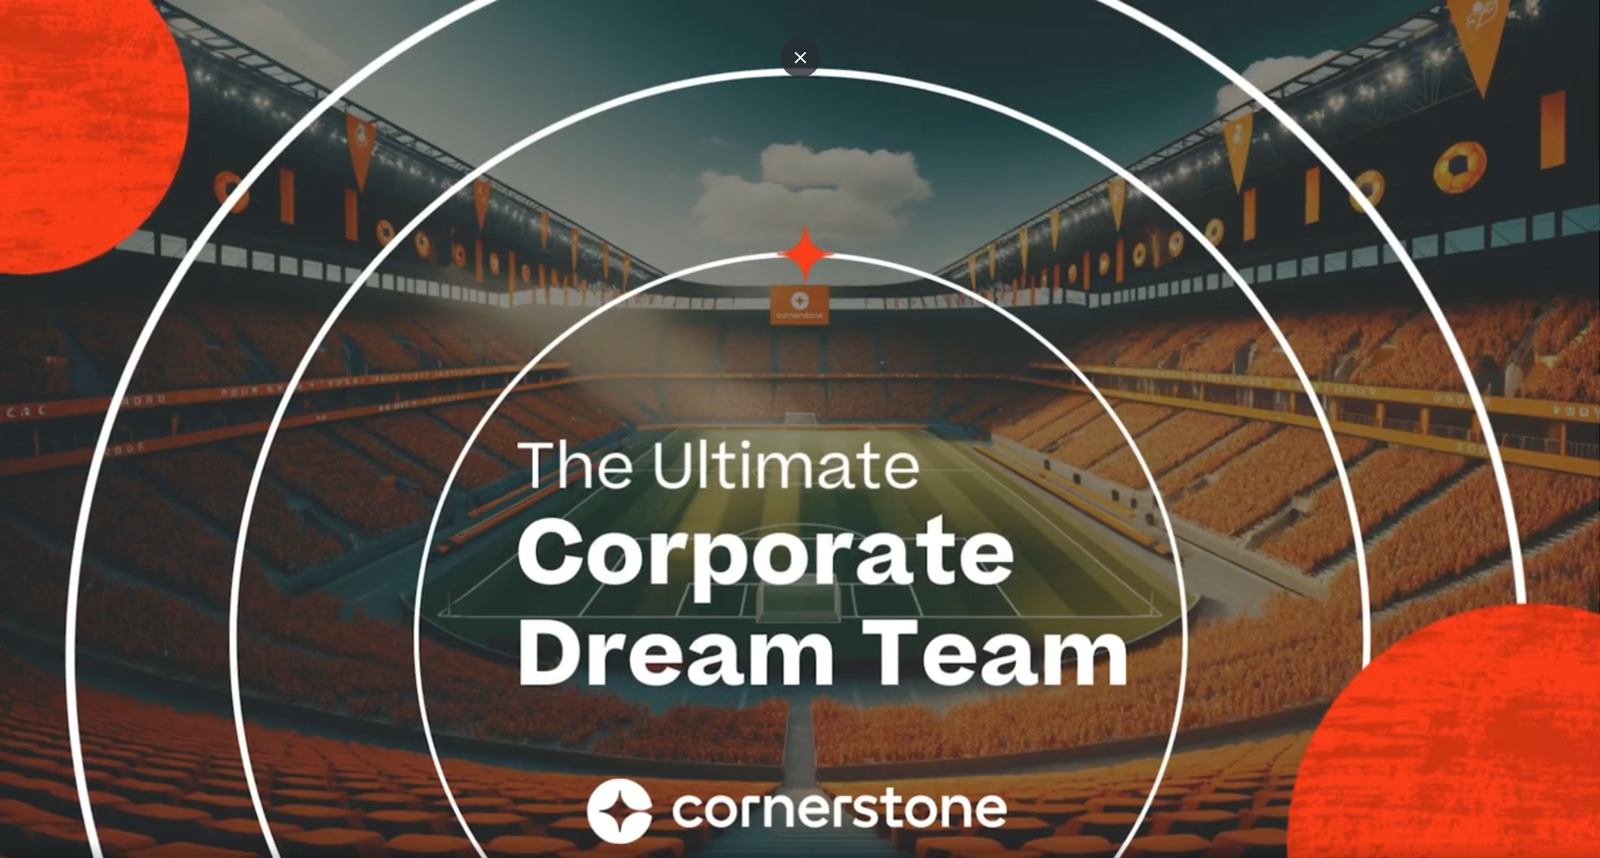 The Ultimate Corporate Dream Team